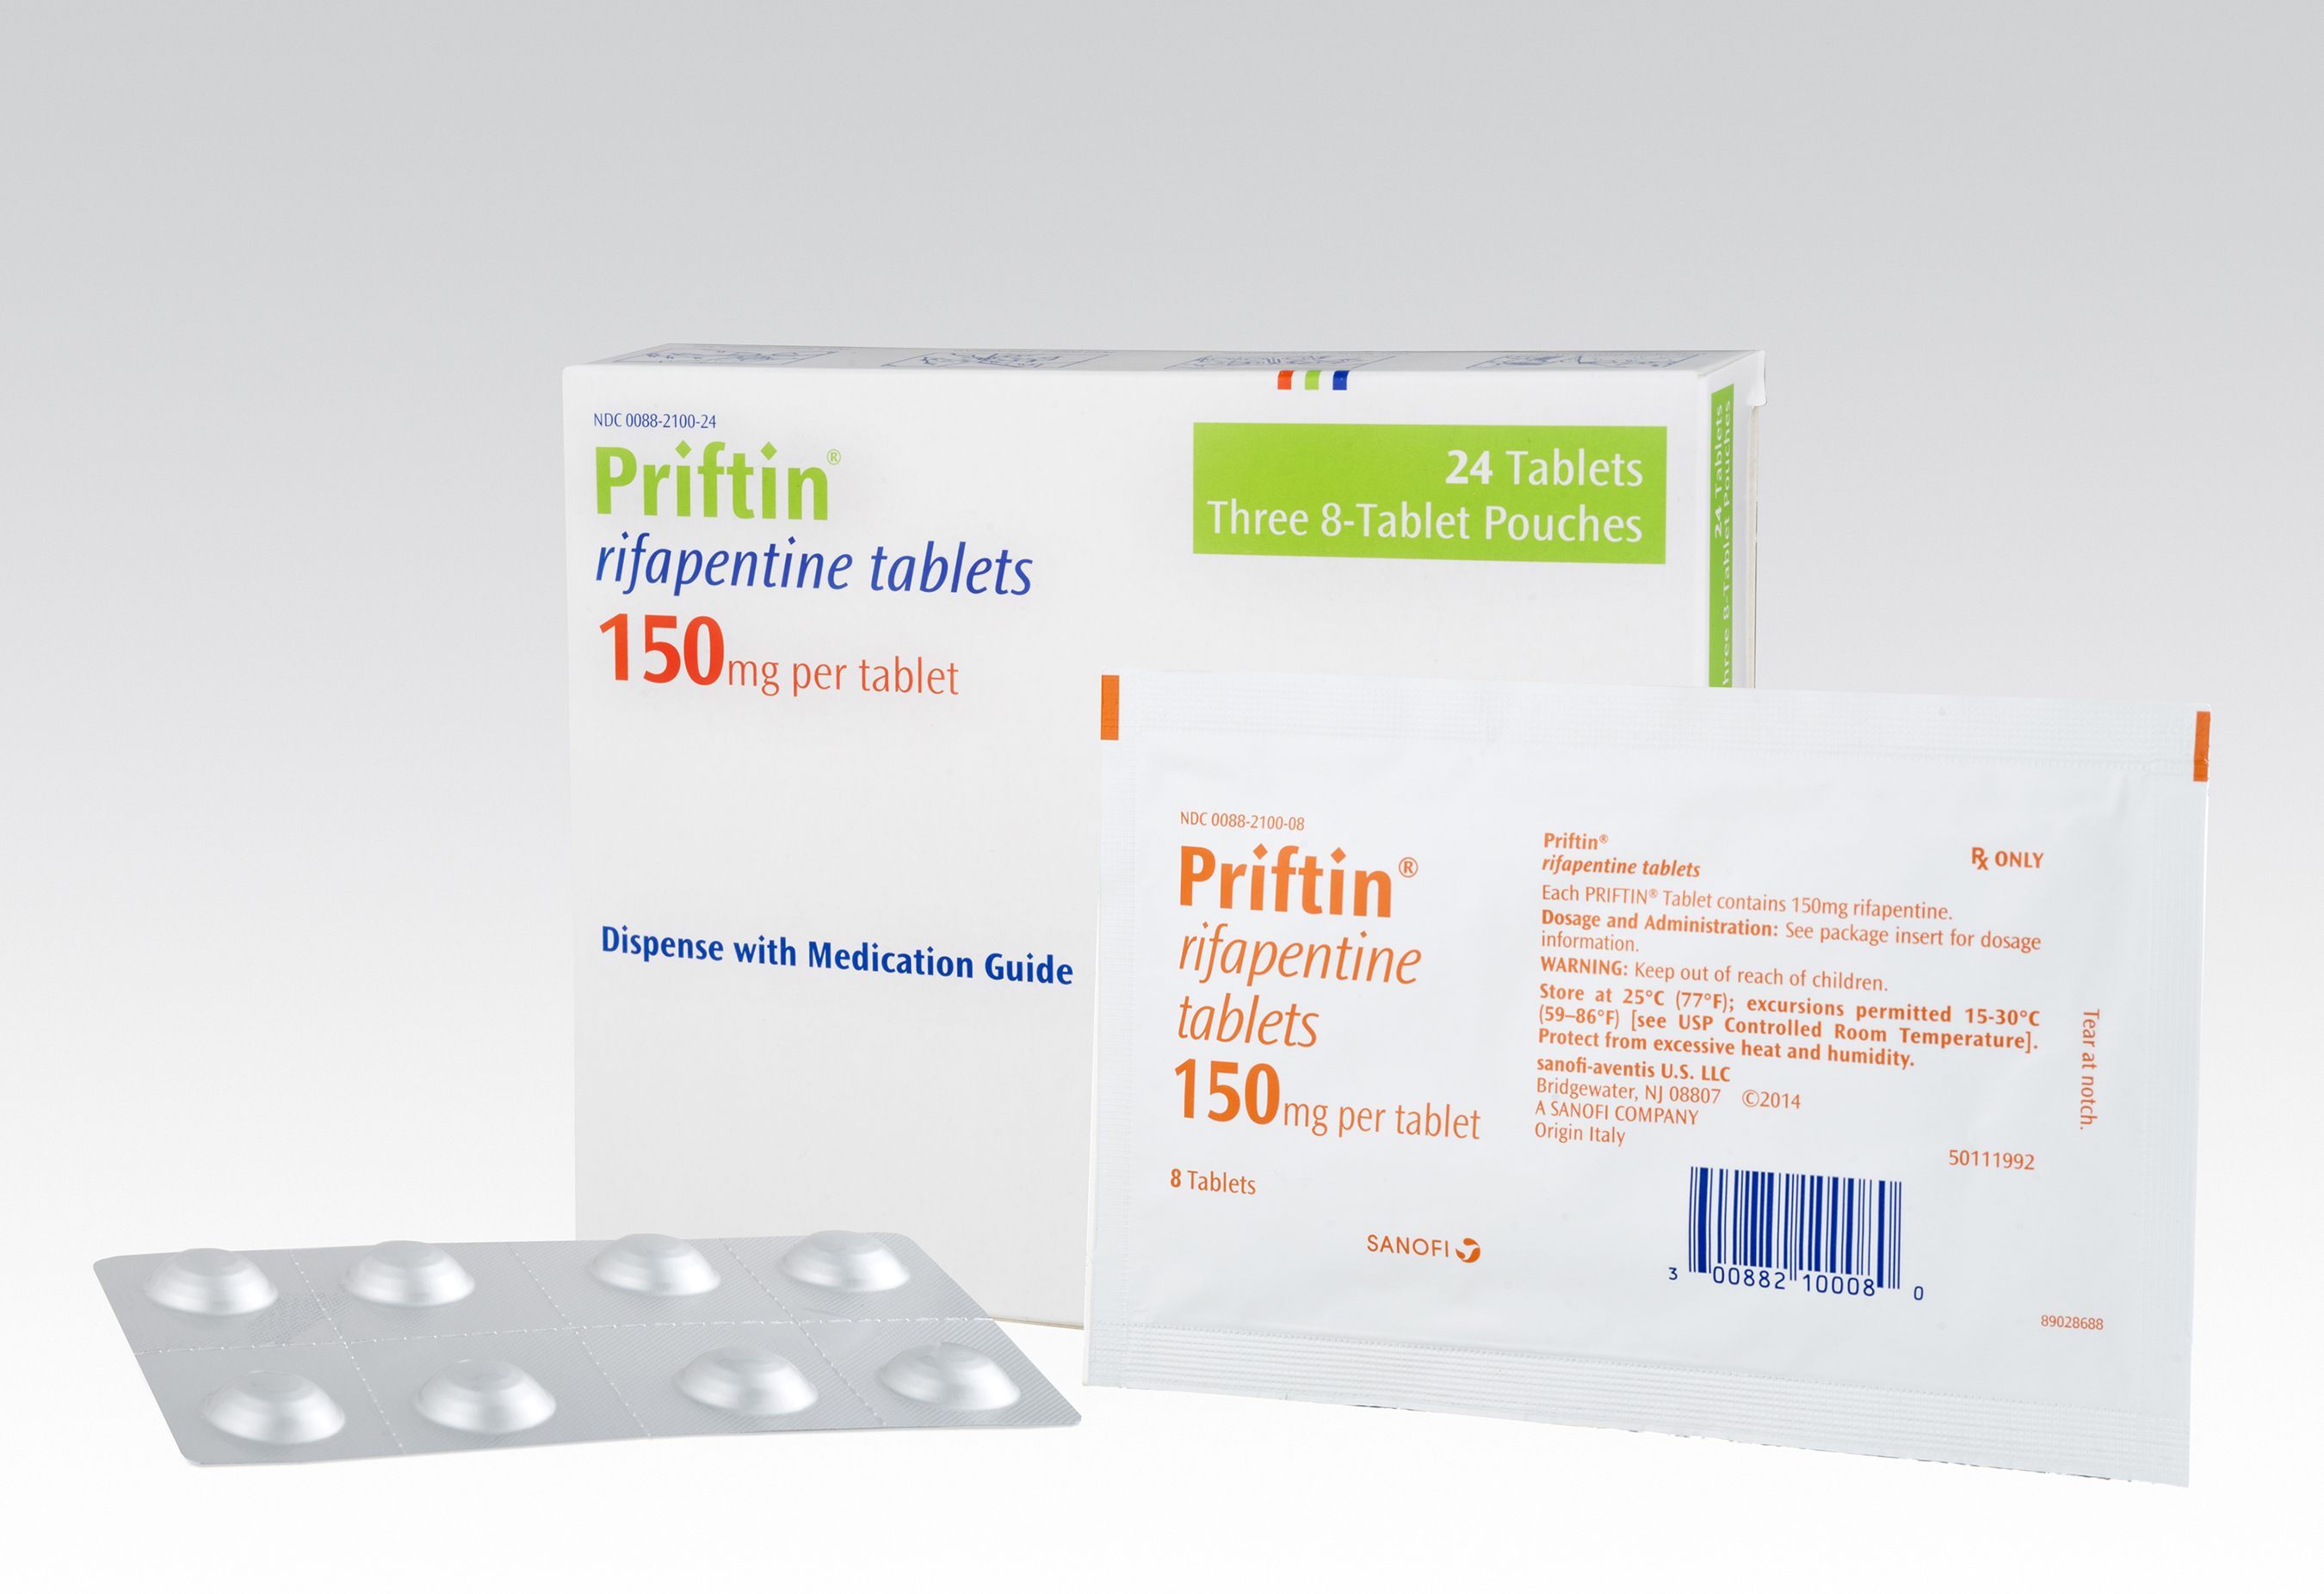 Priftin® rifapentine tablets 150mg 24 tablets